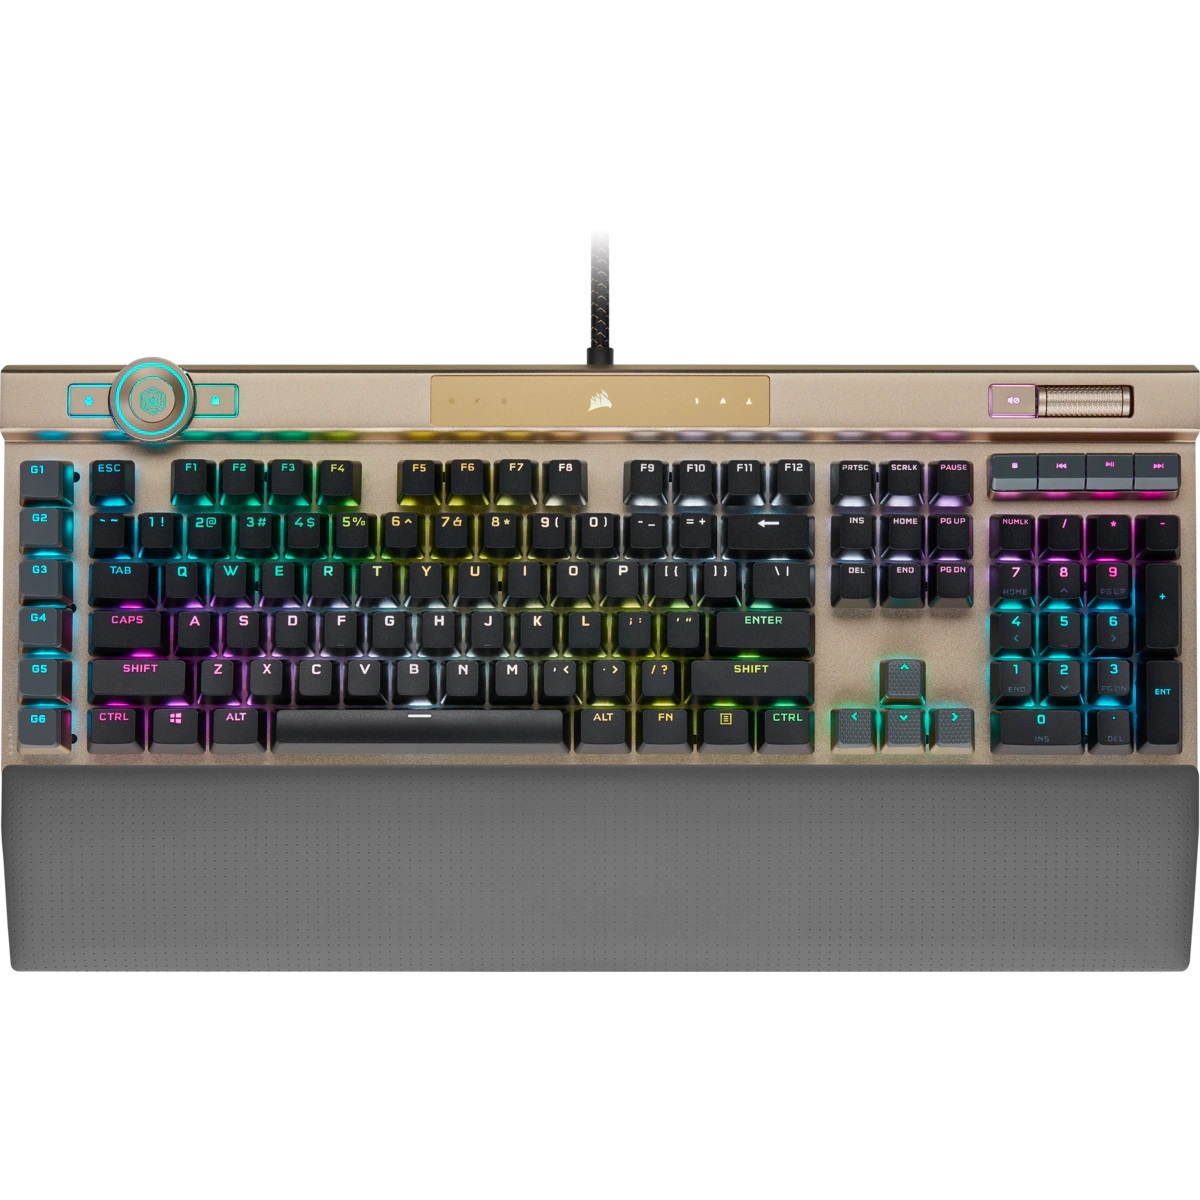  K100 RGB Optical-Mechanical Gaming Keyboard - Midnight Gold  